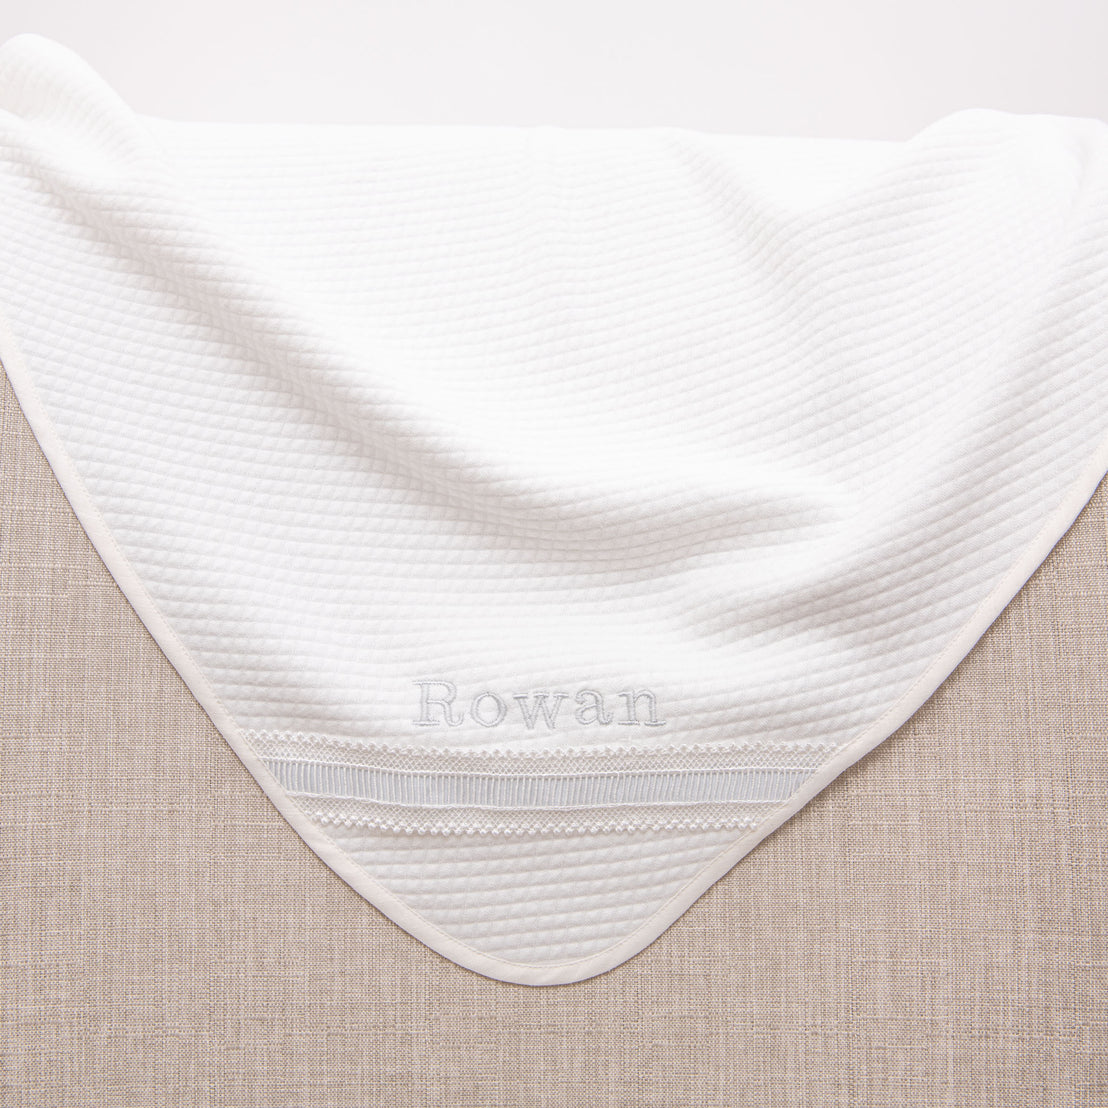 Rowan Blanket